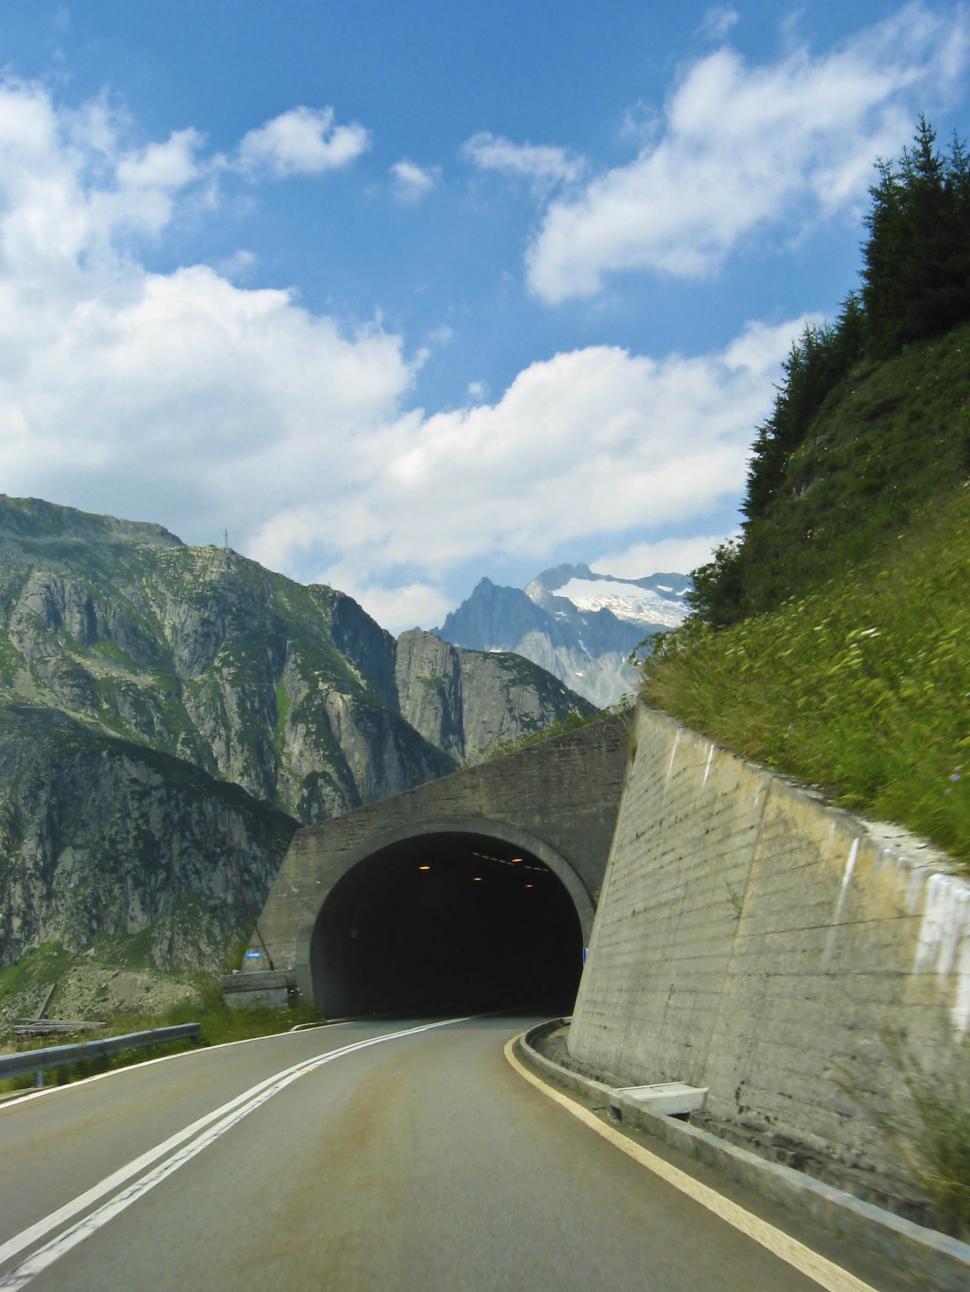 Free Image of Alpine countryside in Switzerland, Europe 